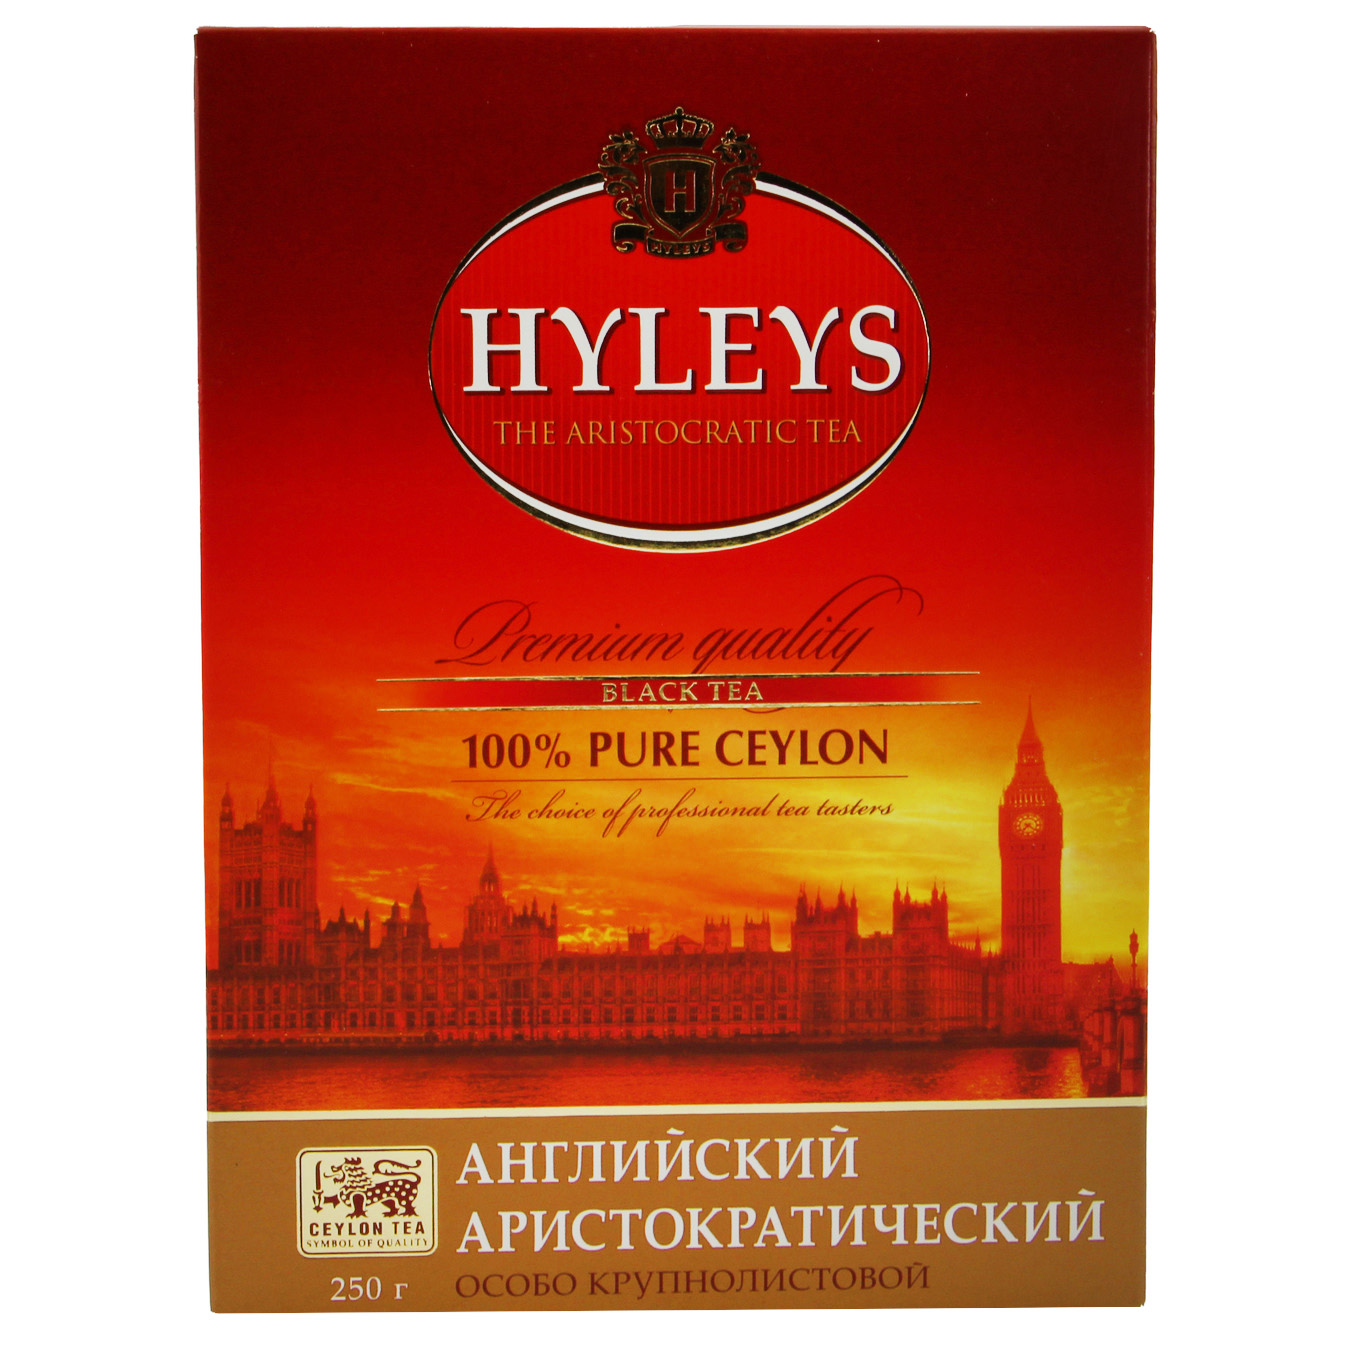 Hyleys English Aristictaric Especially Large Leaf Black Tea 250g